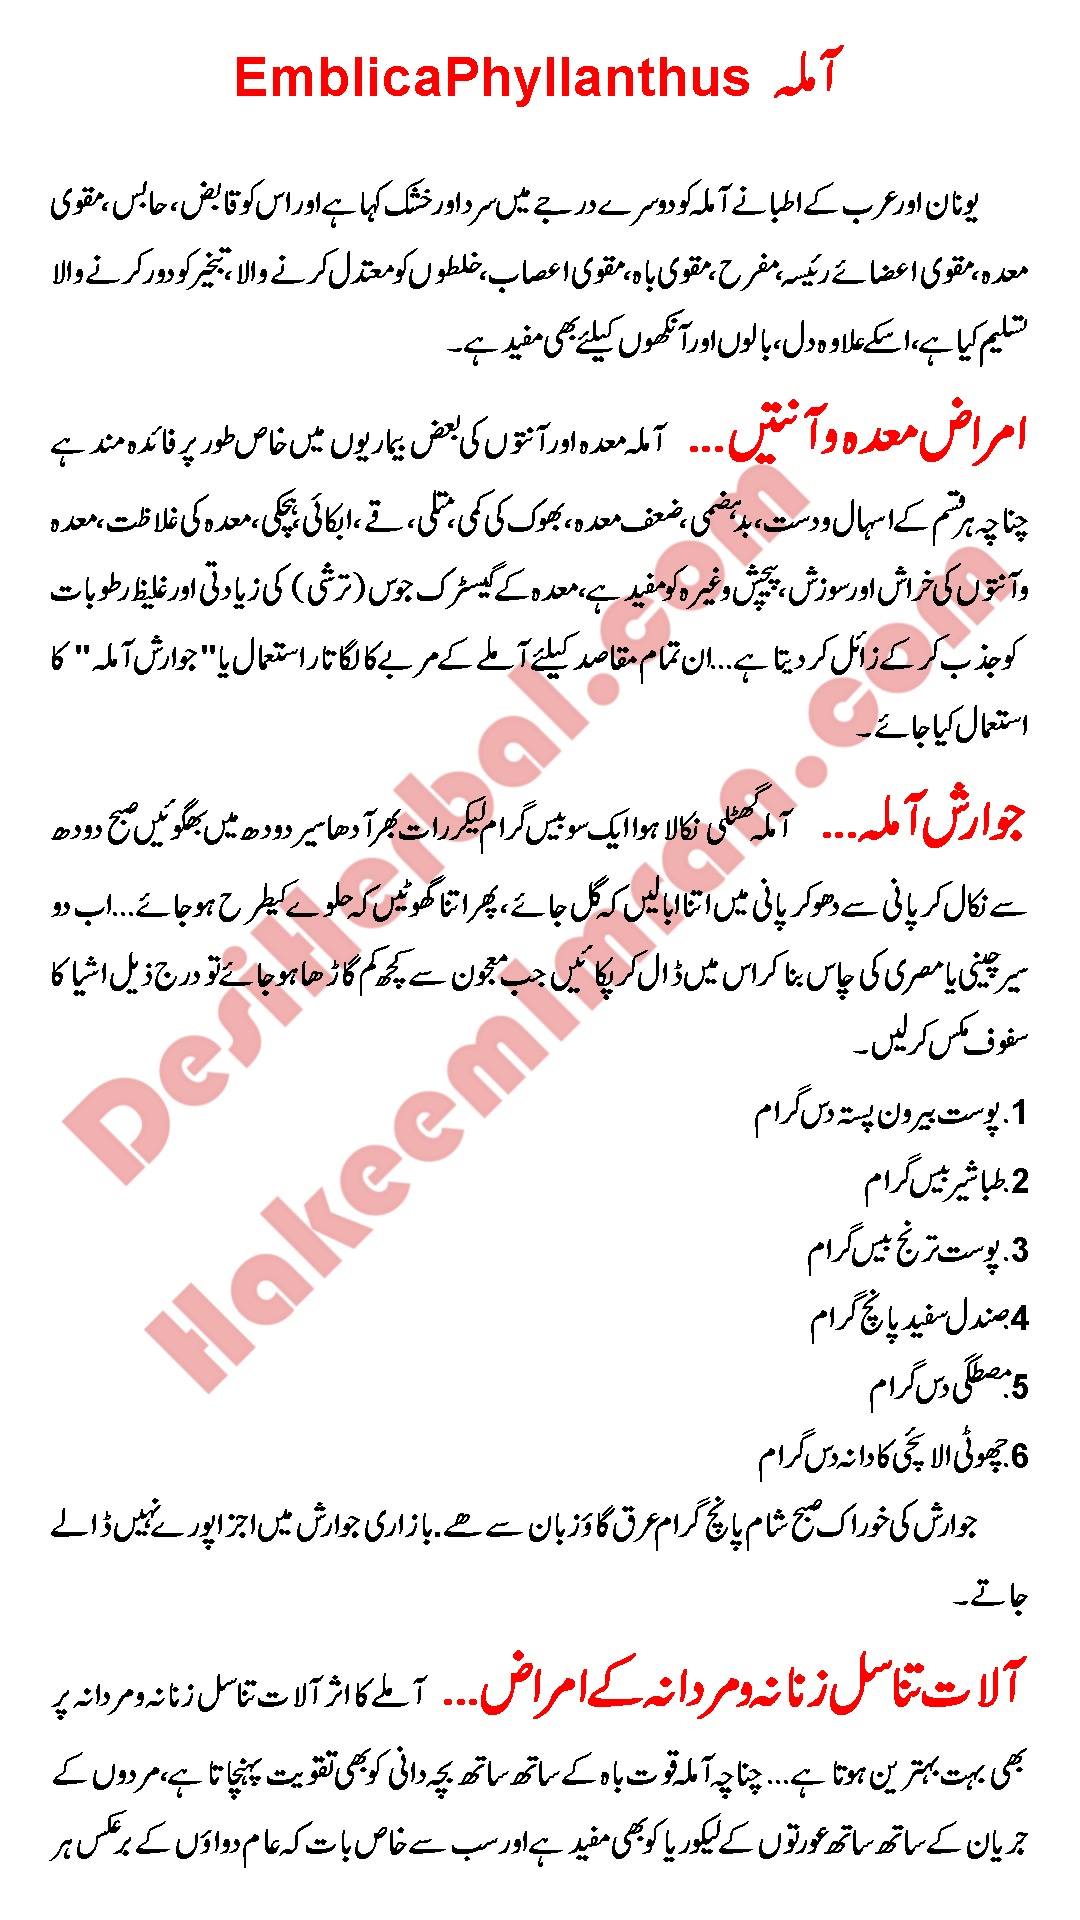 hakeemimran.com-Amla (Gooseberry) Kiya hy Aur Amla Benefits in Urdu